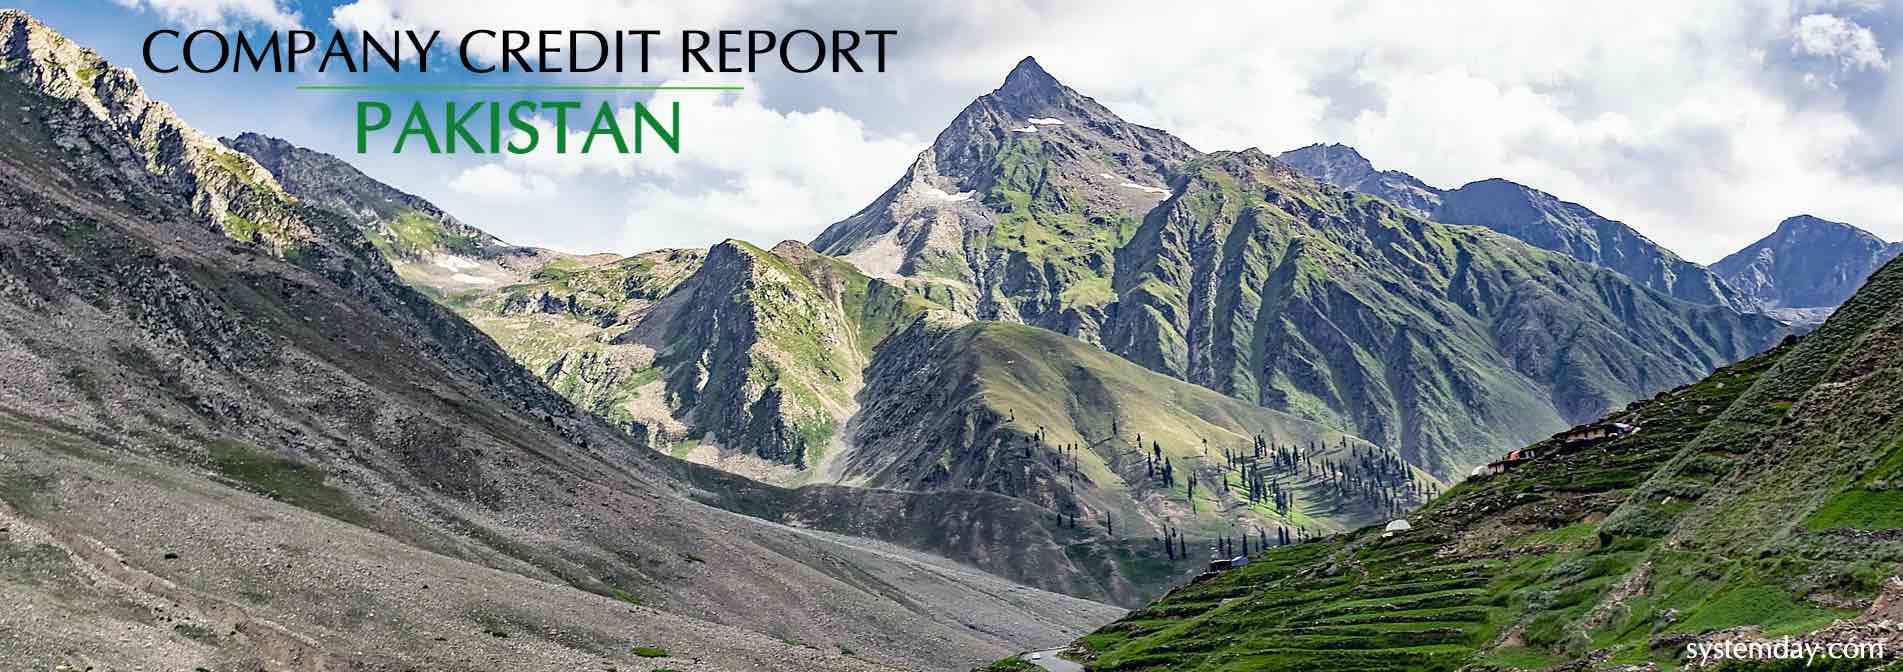 Pakistan Company Credit Report